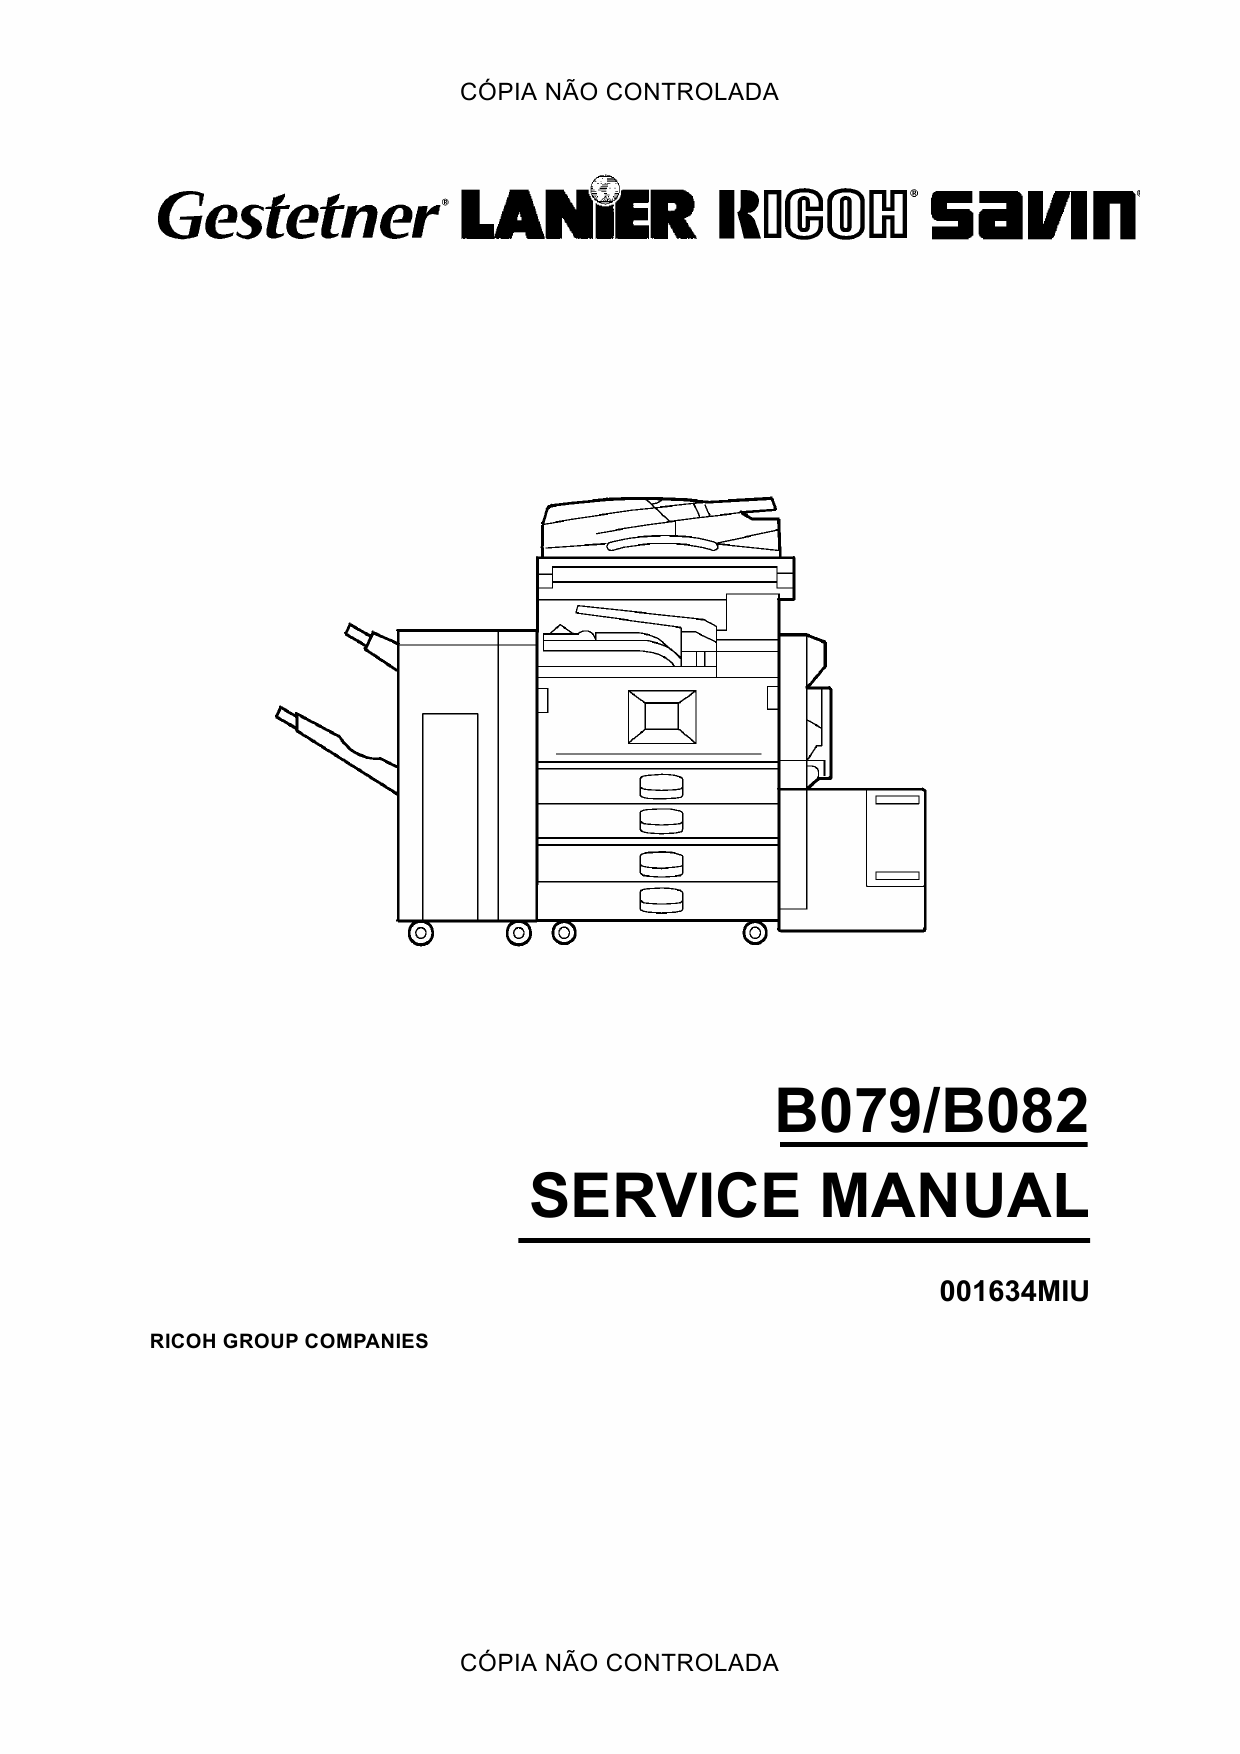 RICOH Aficio 2035 2045 B079 B082 Service Manual-1